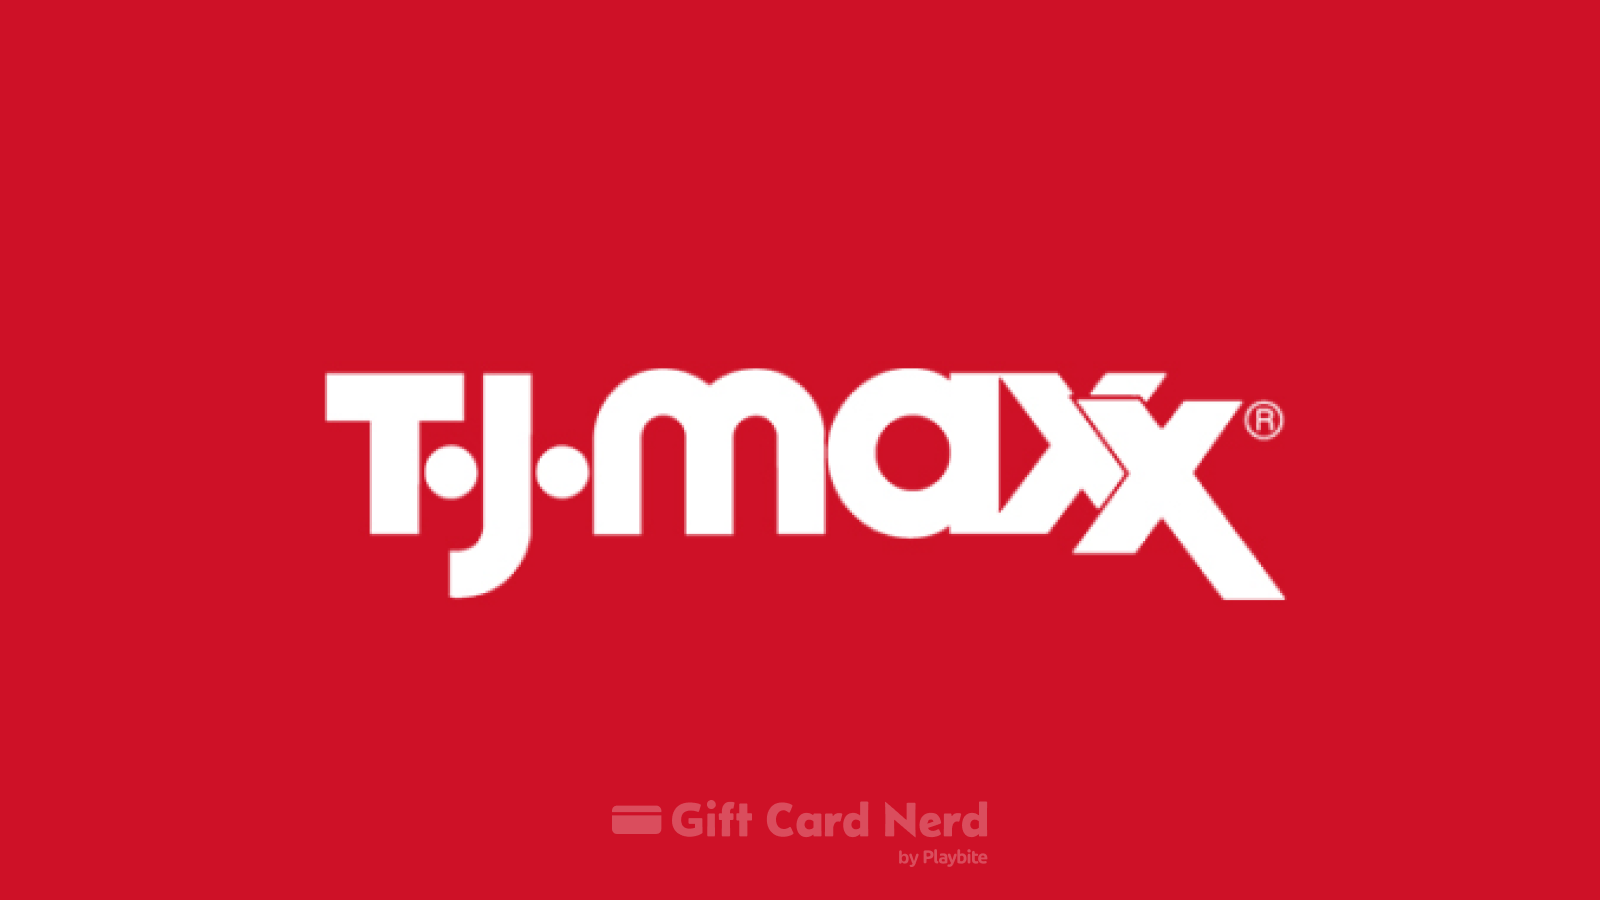 Can I Use a TJ Maxx Gift Card on Grubhub?